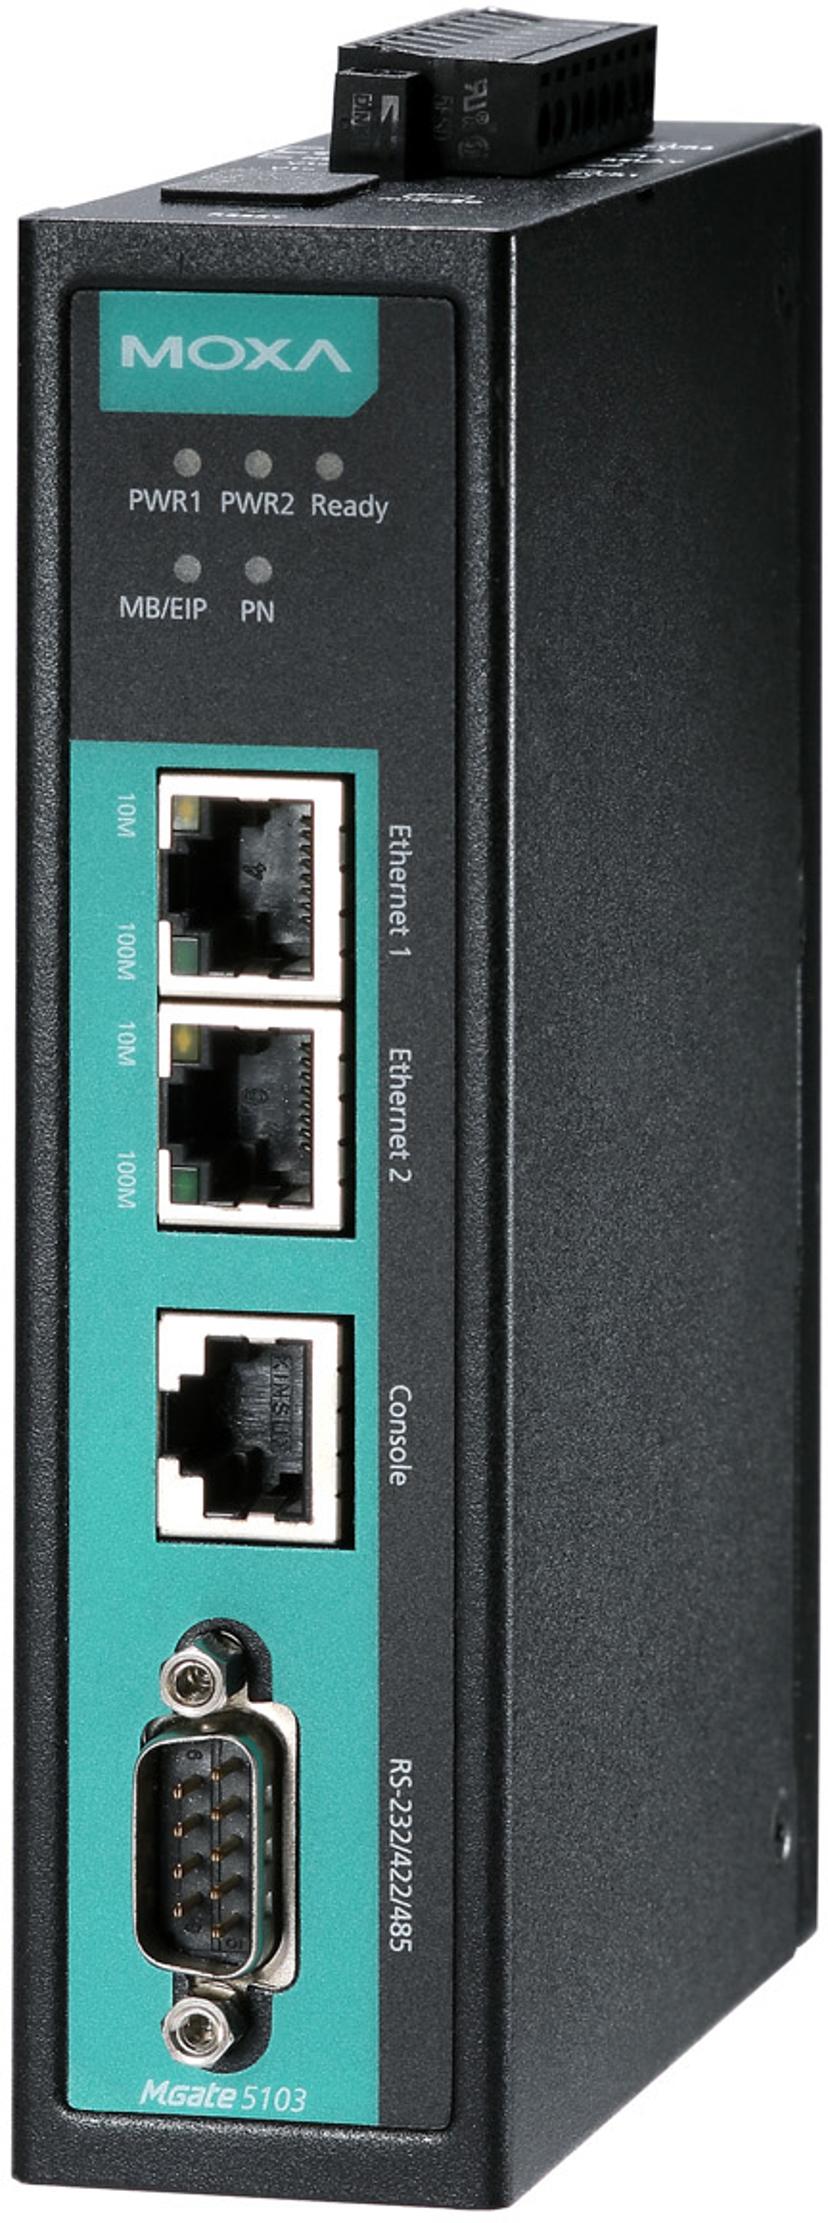 Moxa Mgate 5103 1-Port Modbus Profinet Gateway